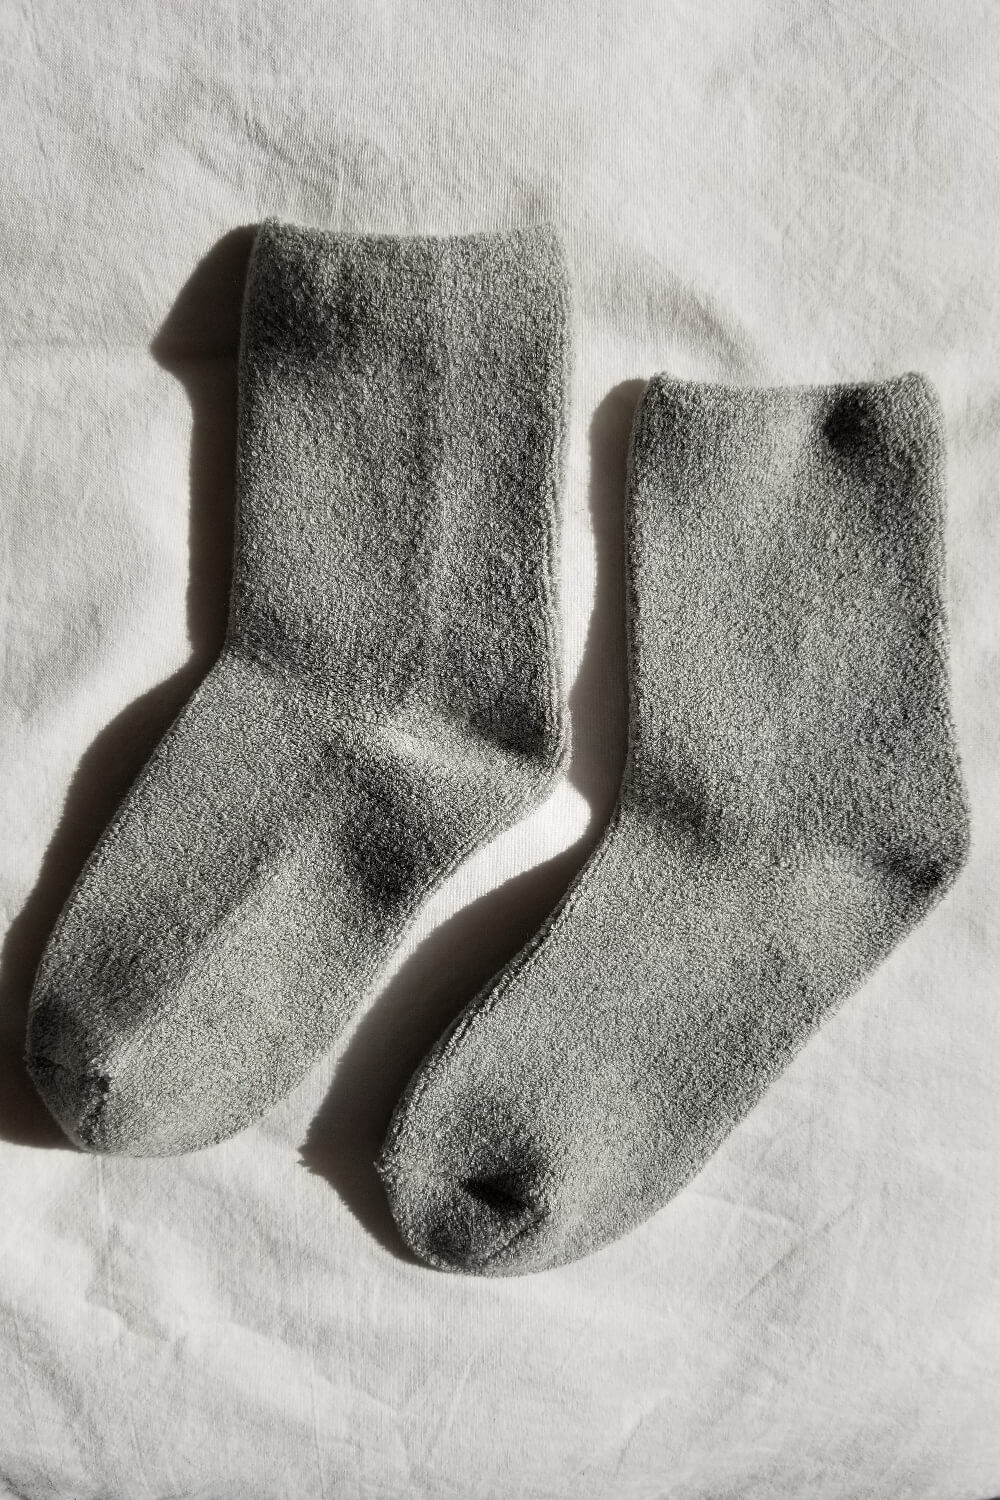 Cloud Socks | Heather Grey | by Le Bon Shoppe - Lifestory